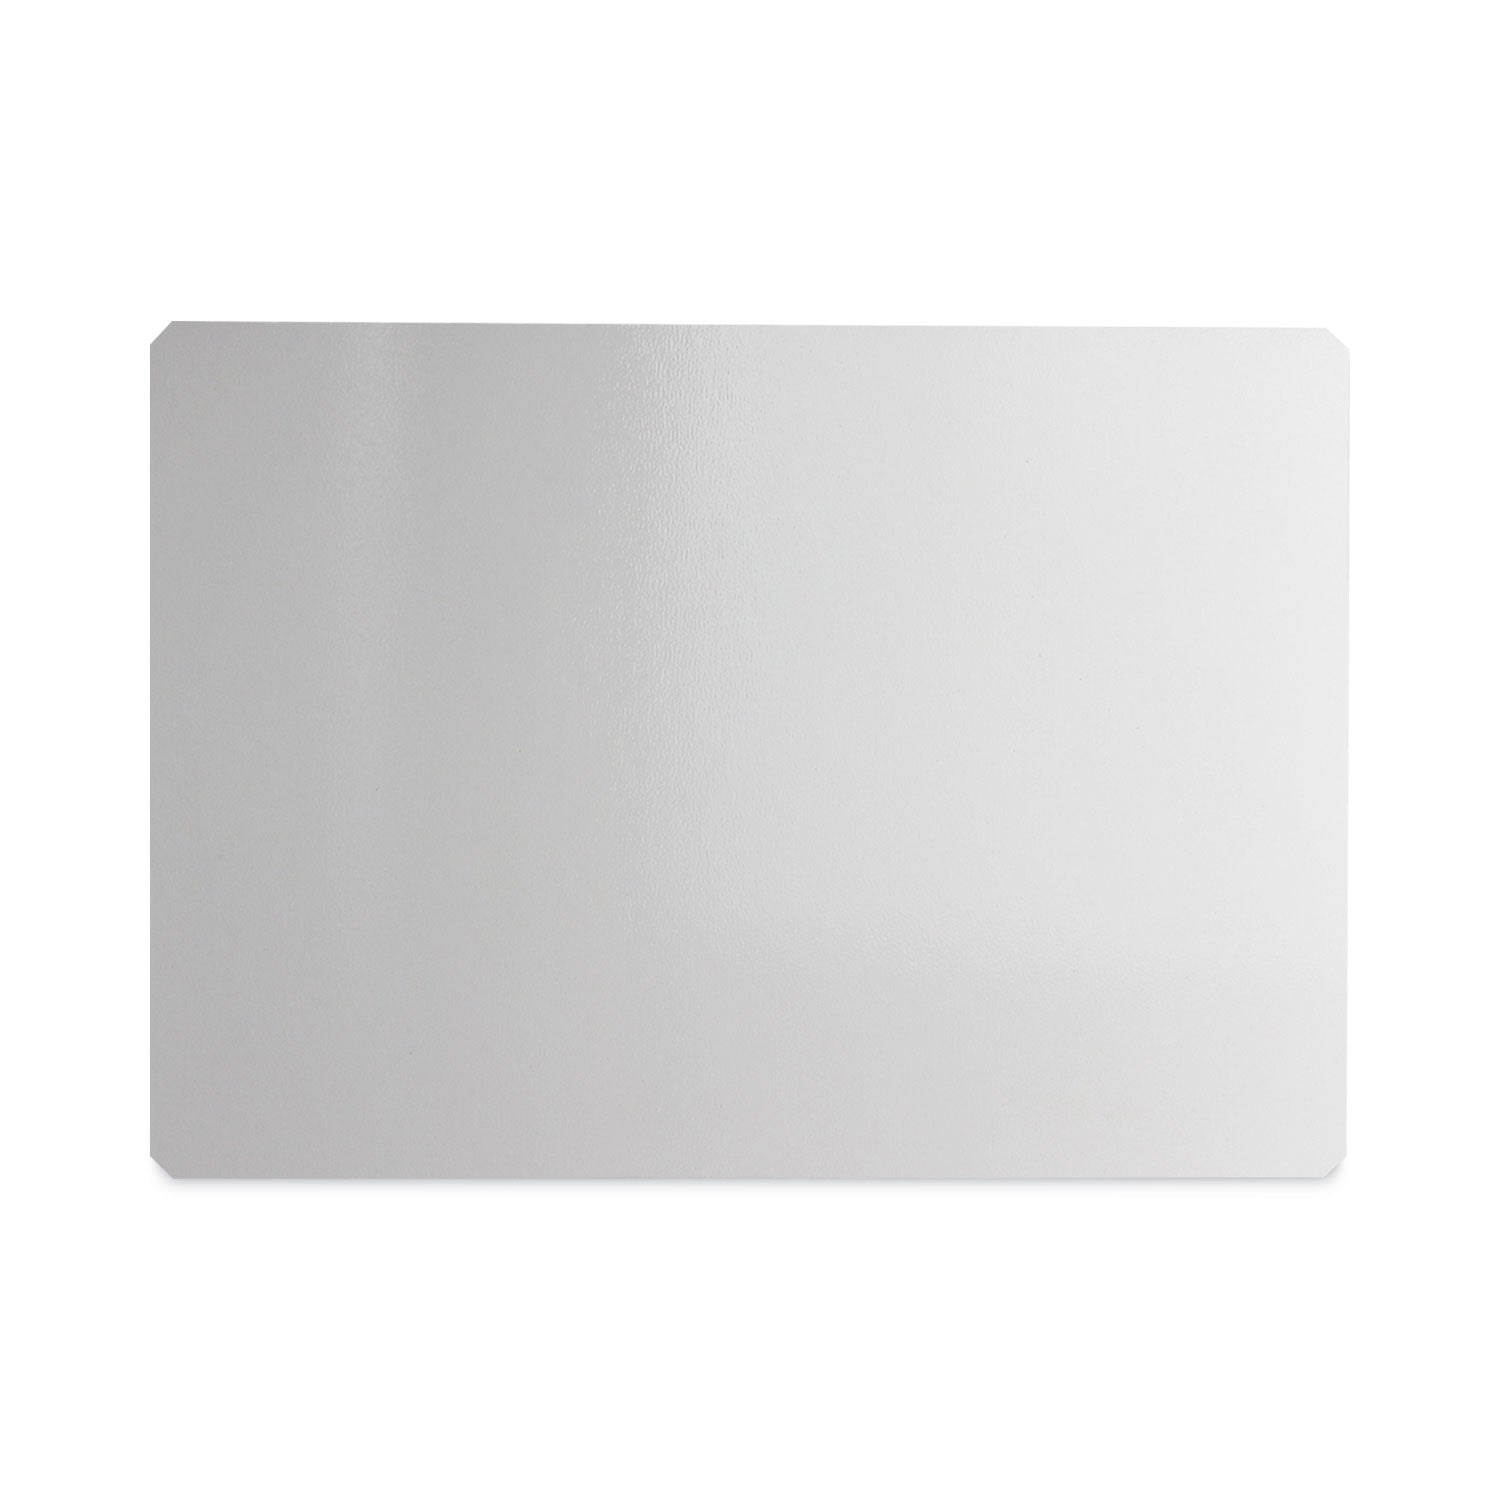 magnetic-dry-erase-board-12-x-9-white-surface_flp10025 - 1